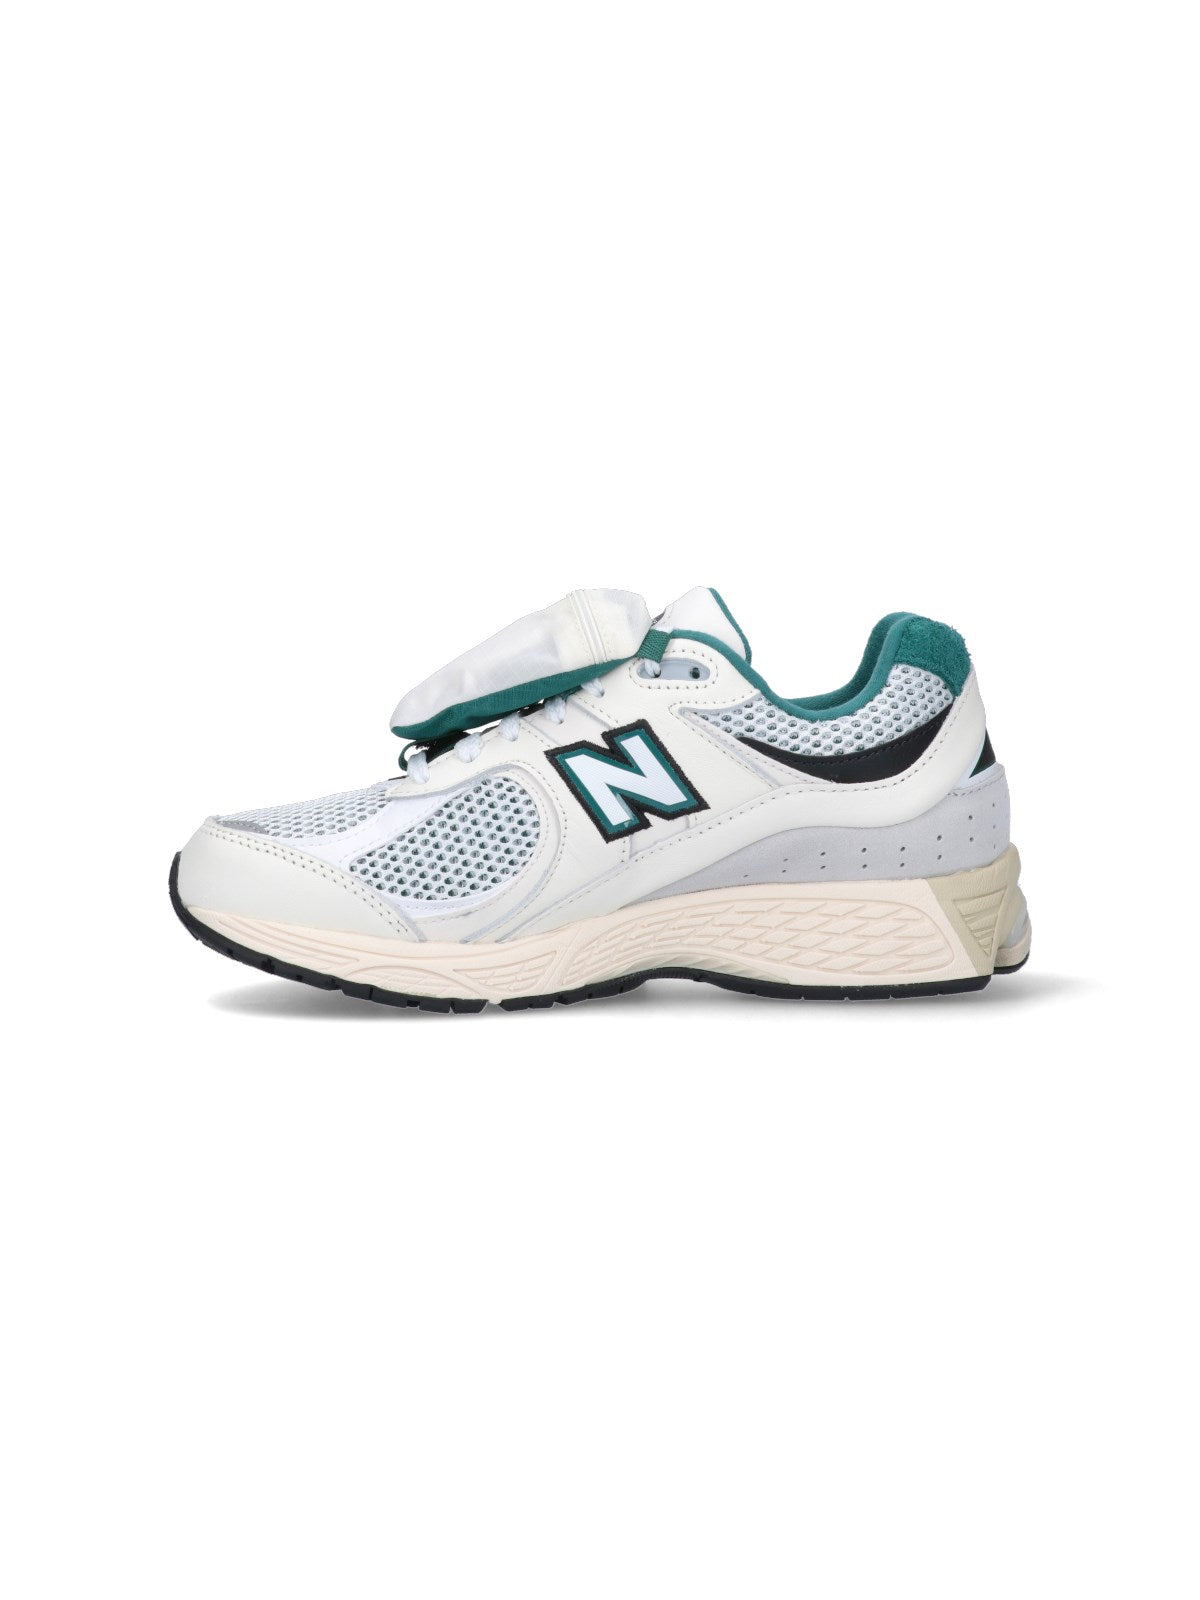 new balance sneakers "2002r nightwatch green"